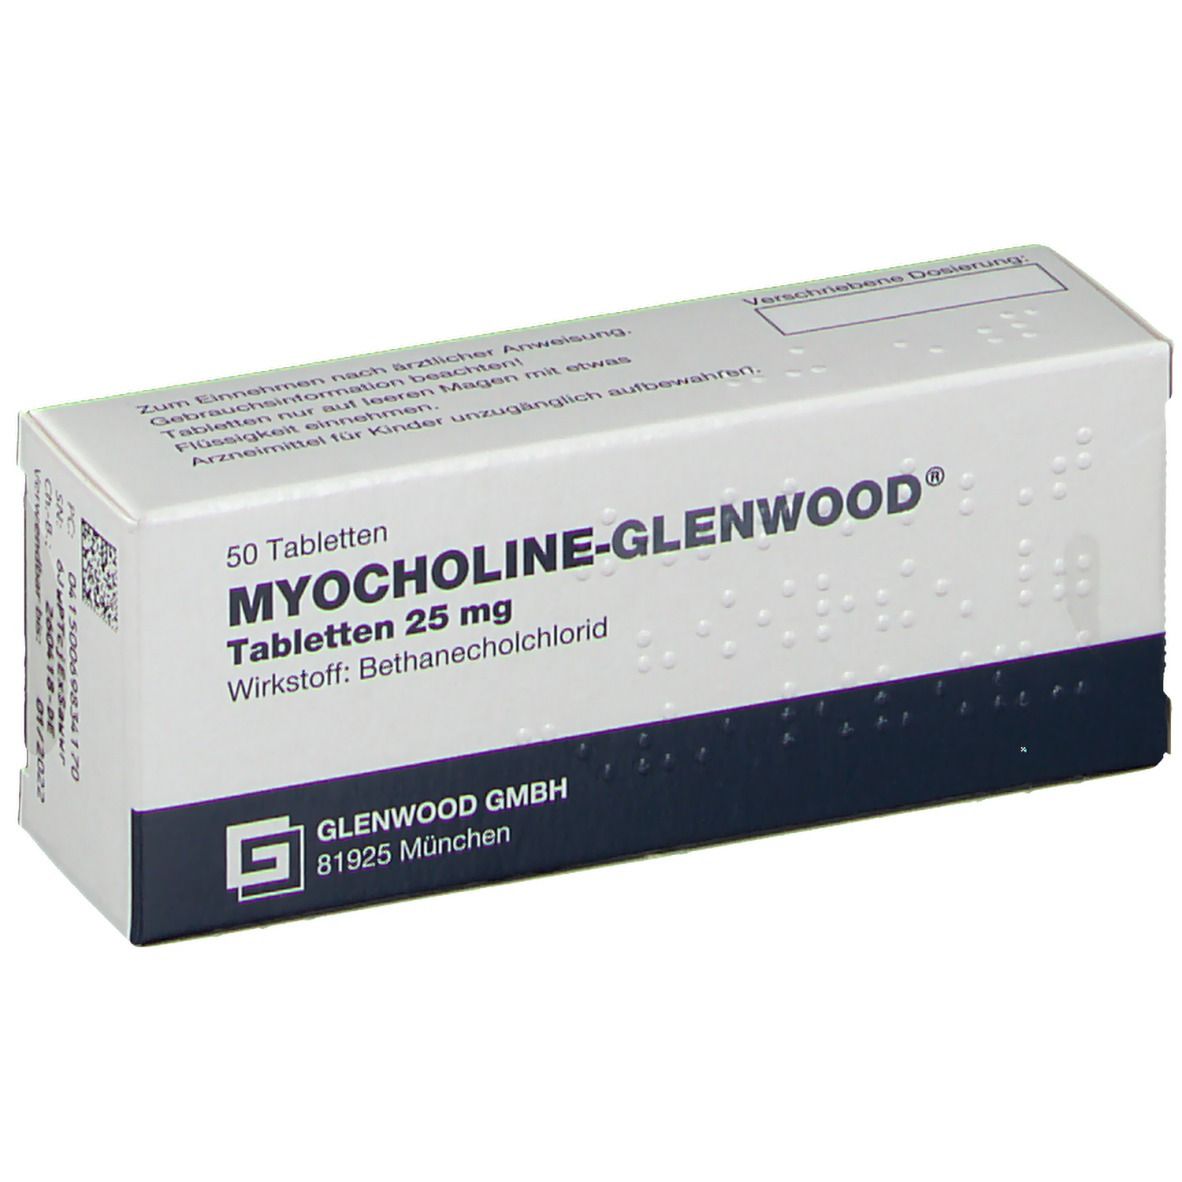 MYCHOLINE-GLENWOOD® 25 mg